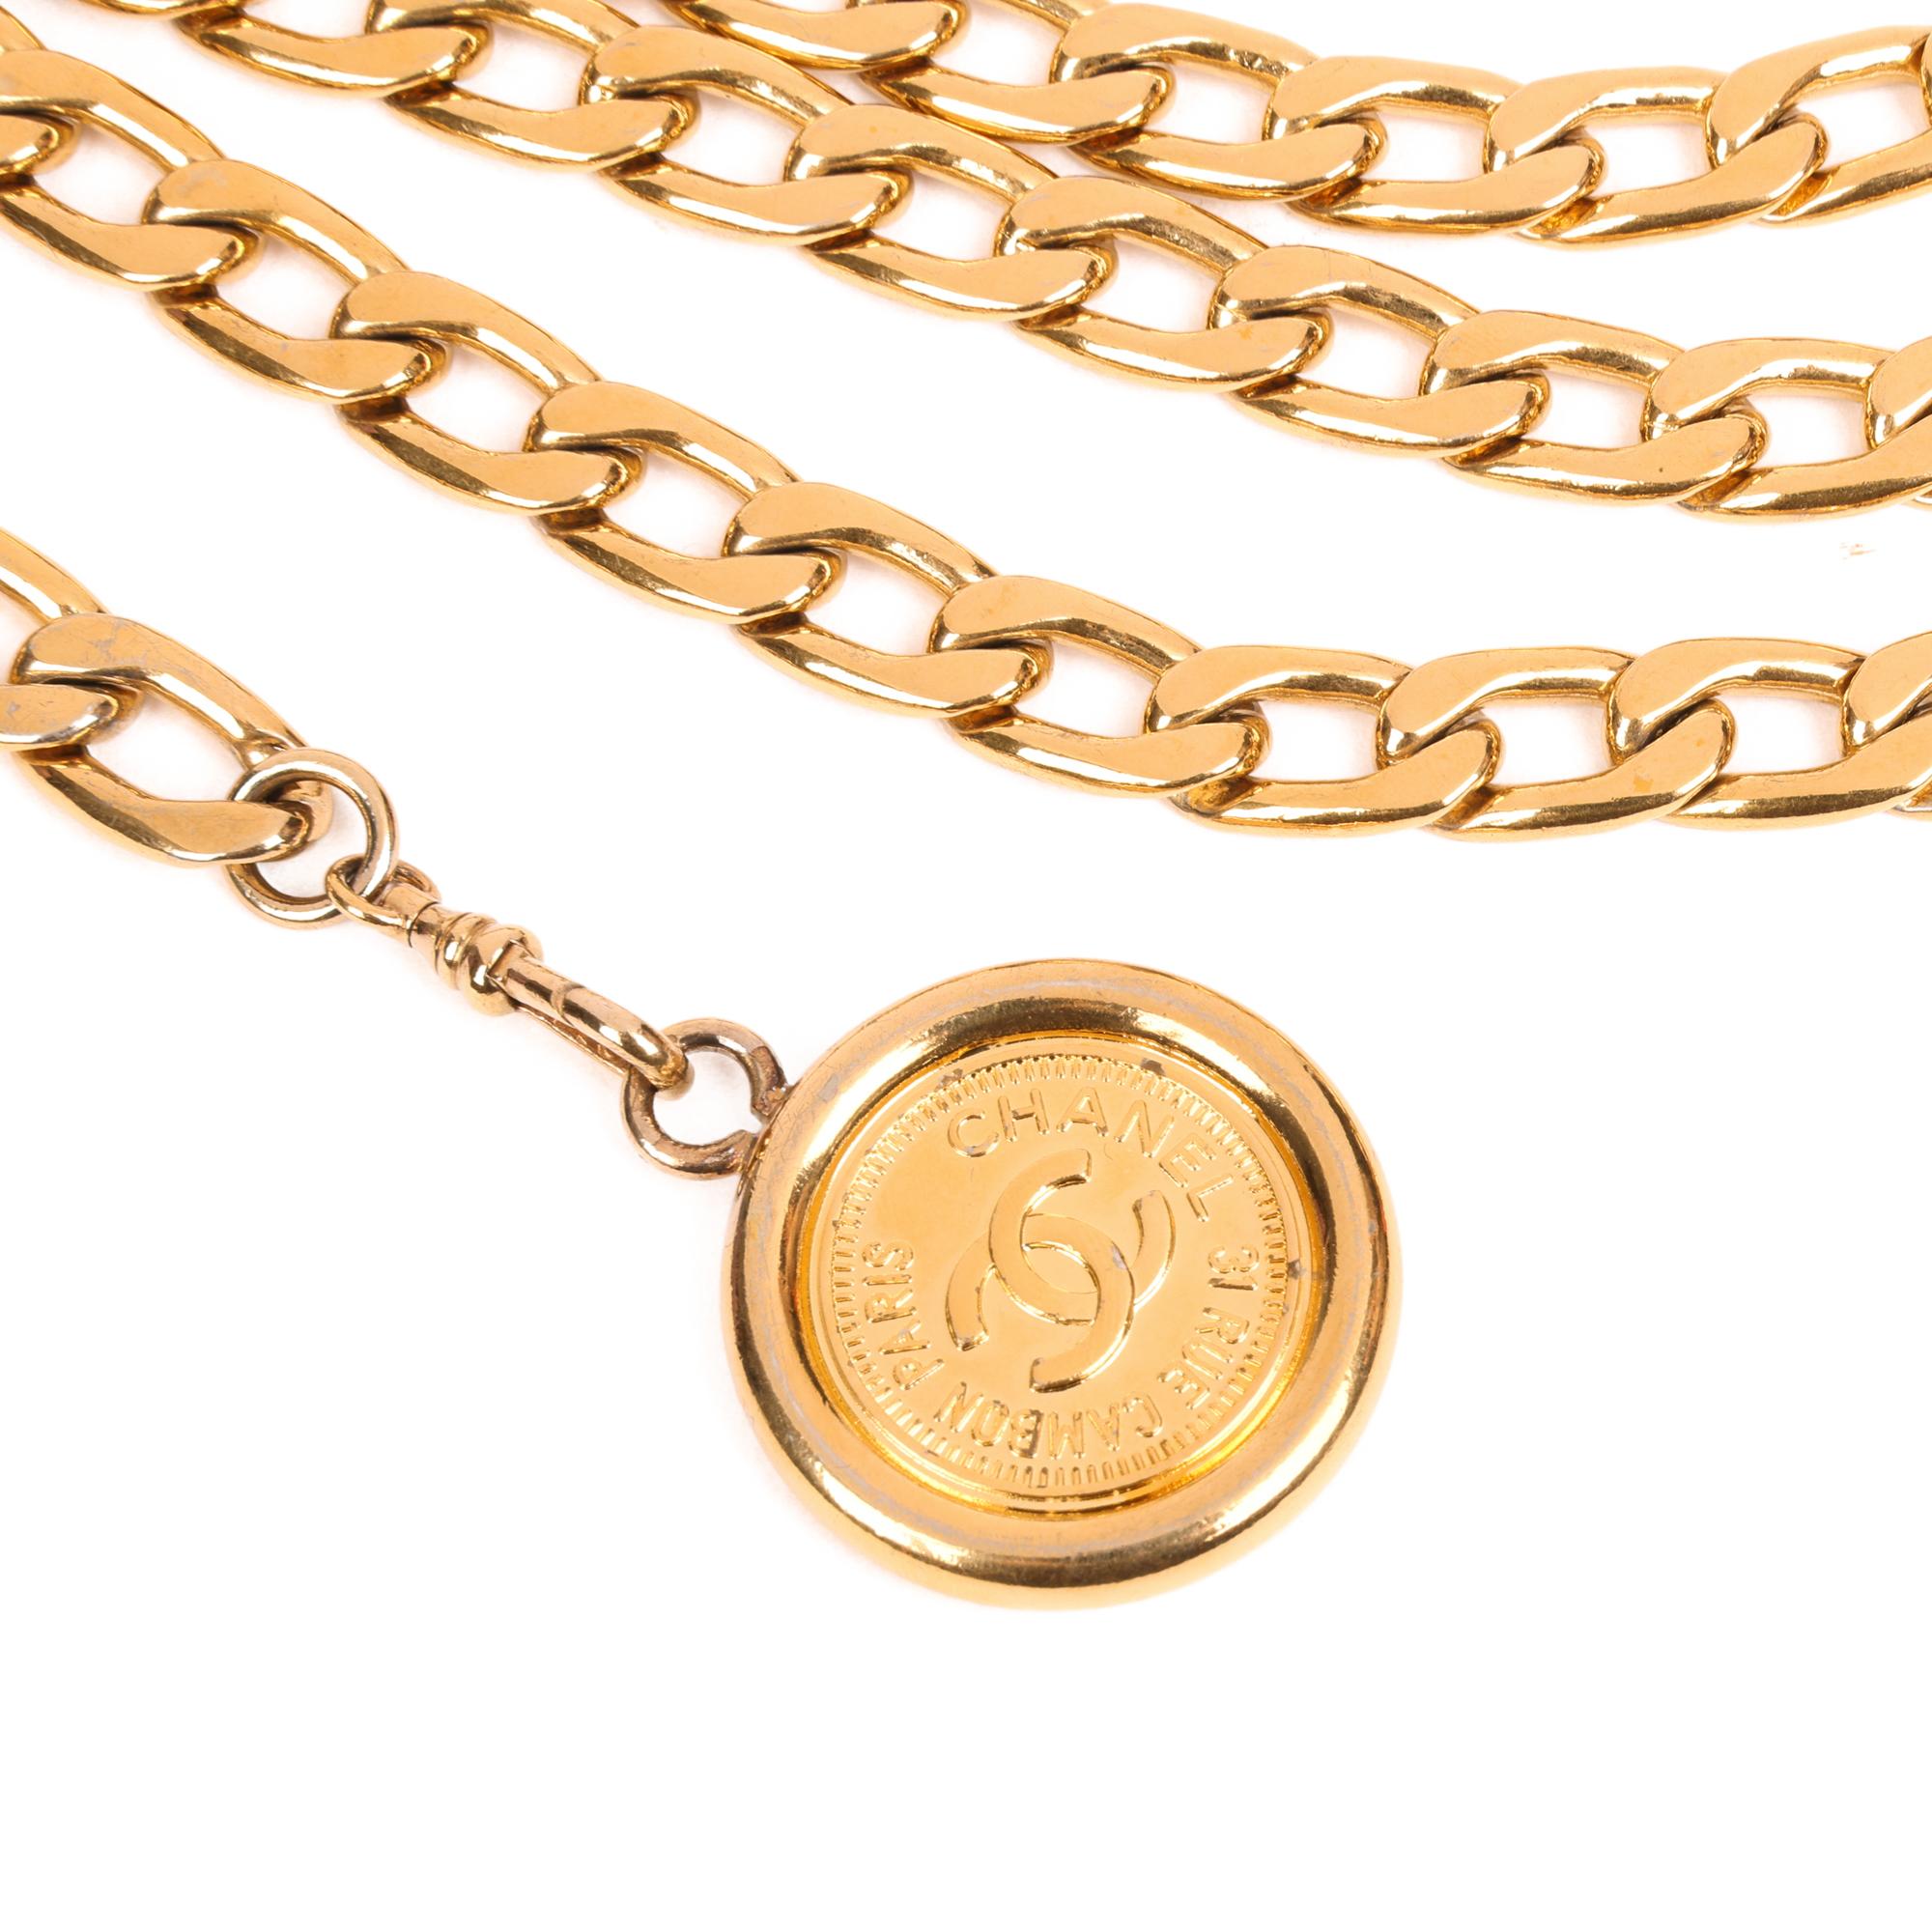 gold coin chain belt